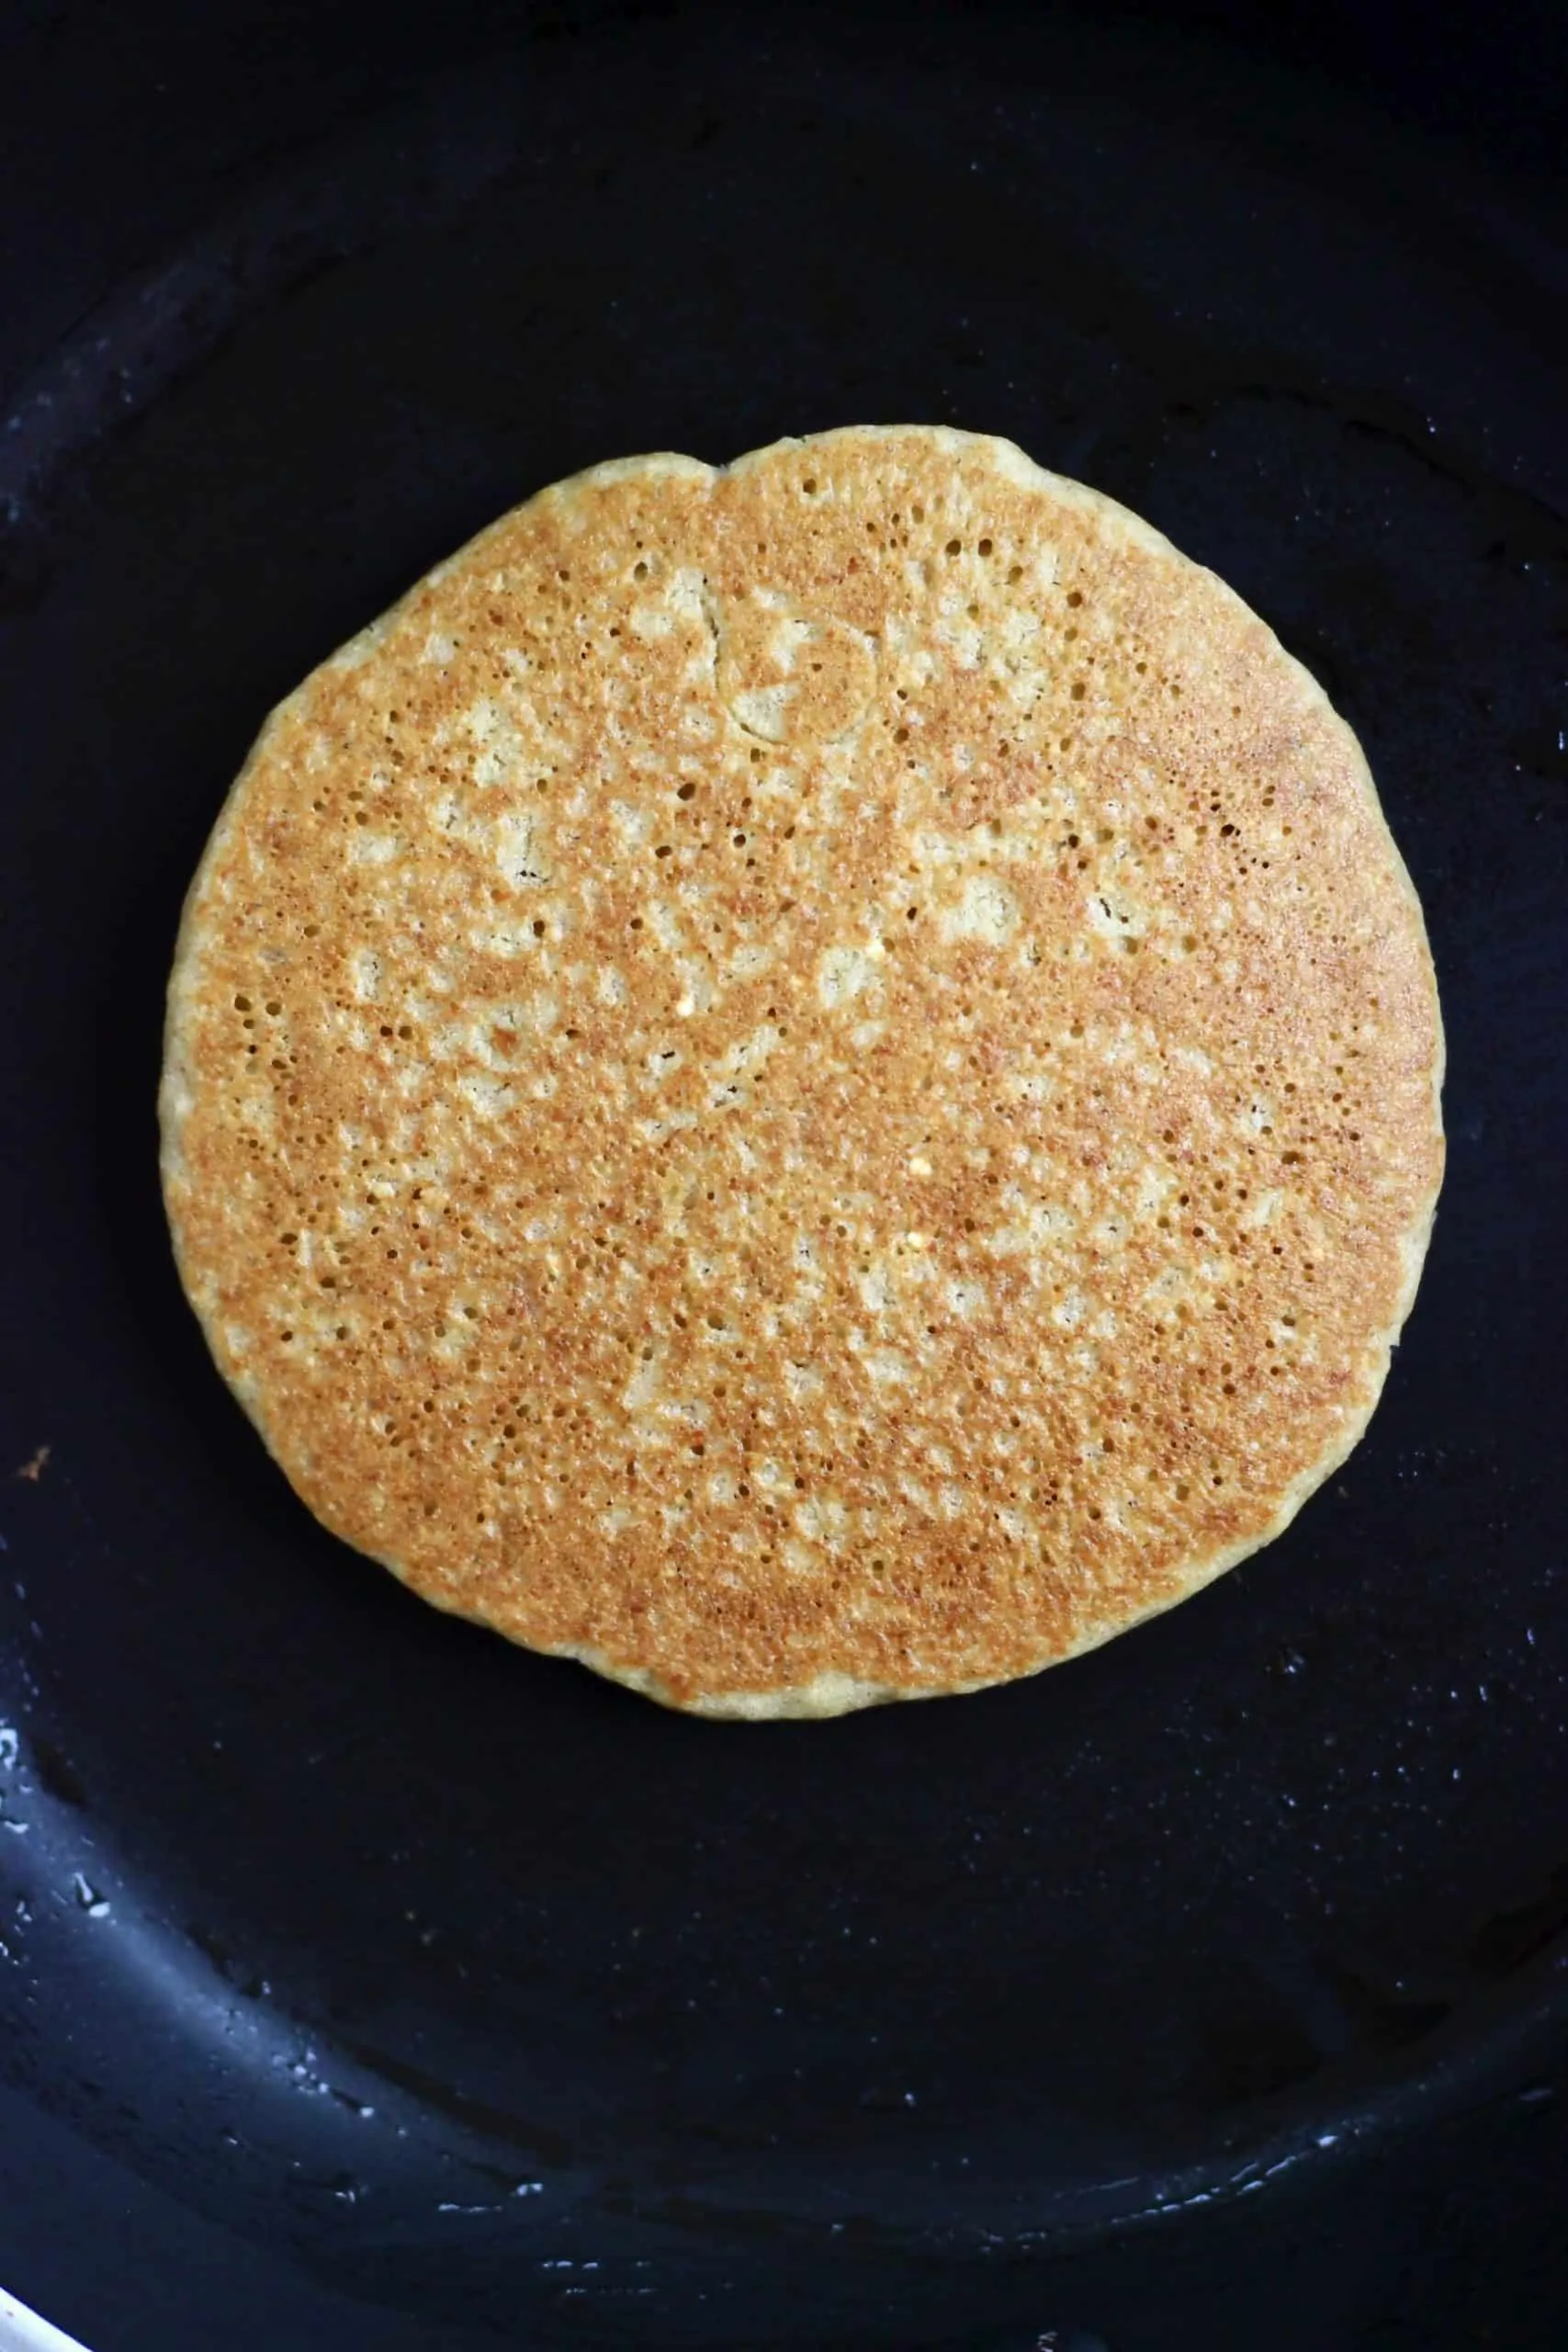 A golden brown quinoa pancake in a black frying pan